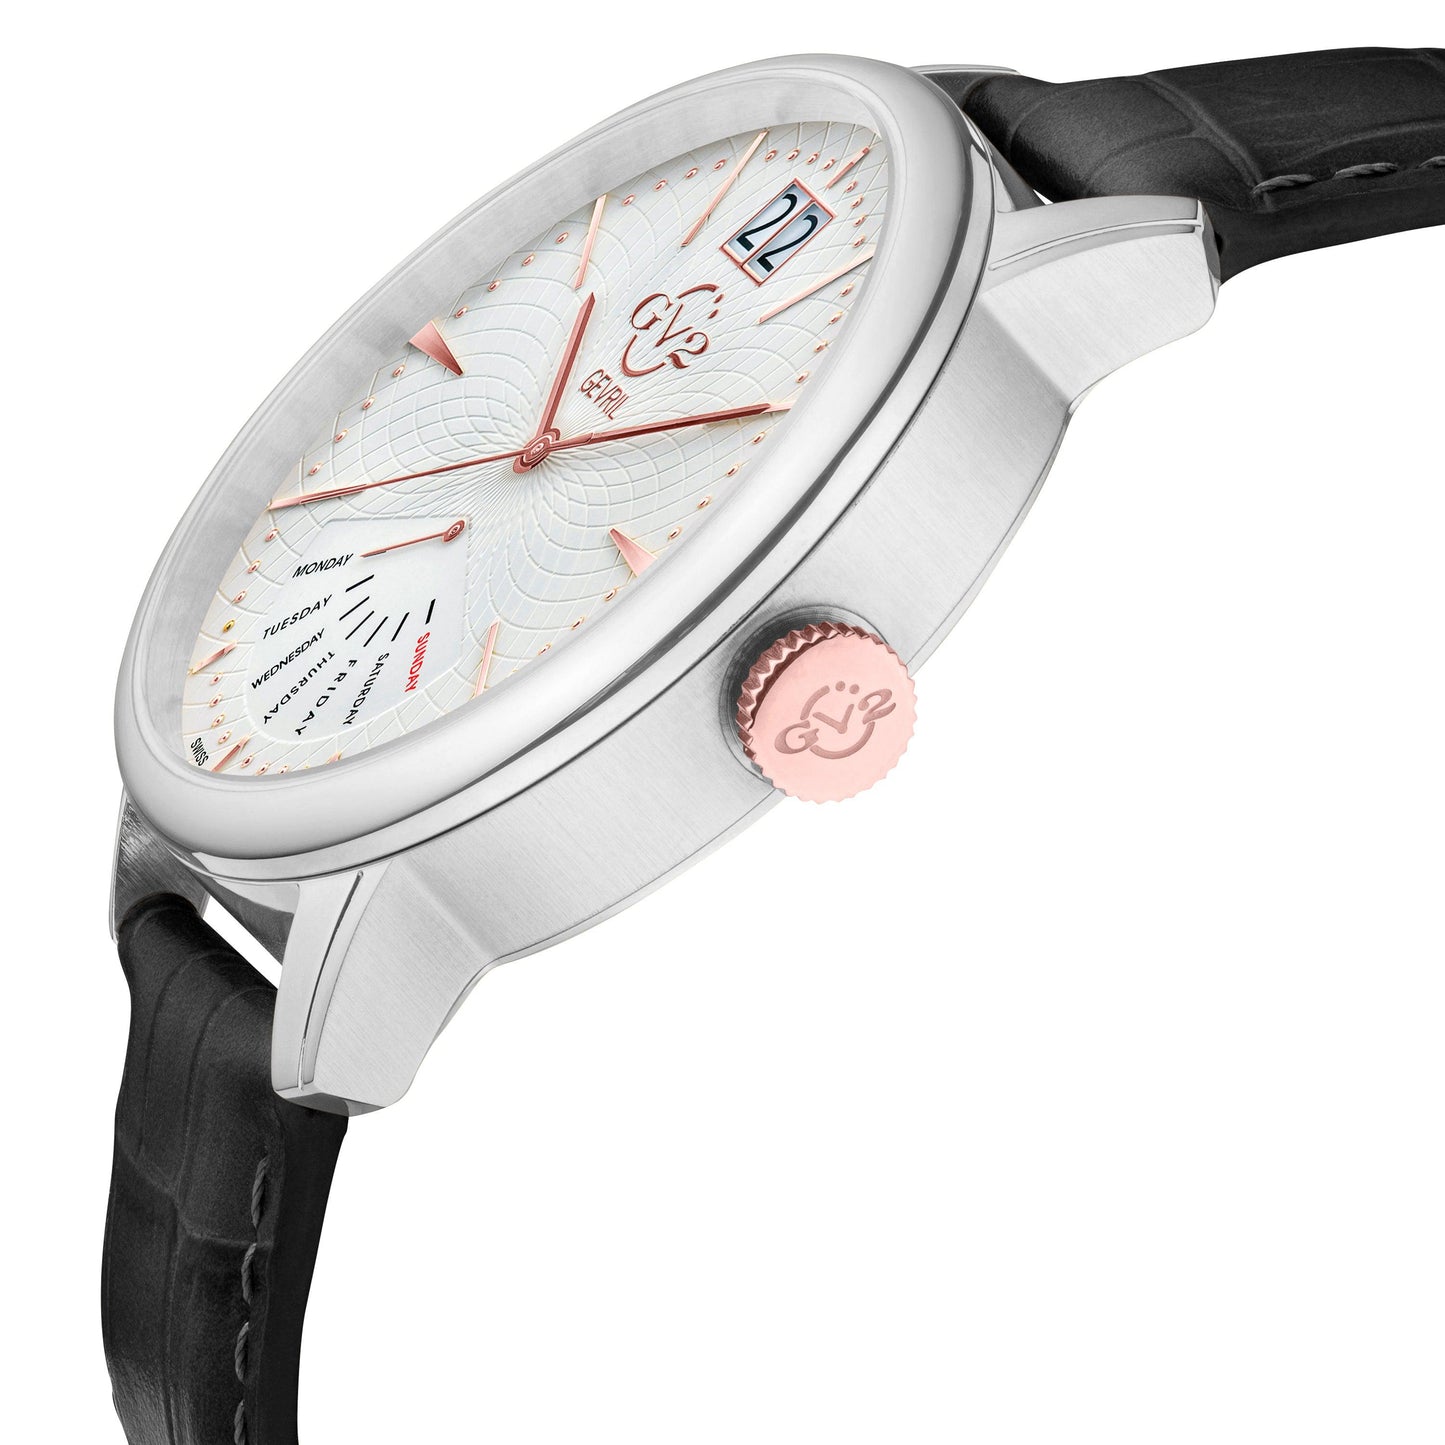 Gevril-Luxury-Swiss-Watches-GV2 Rovescio - Day/Date-56202